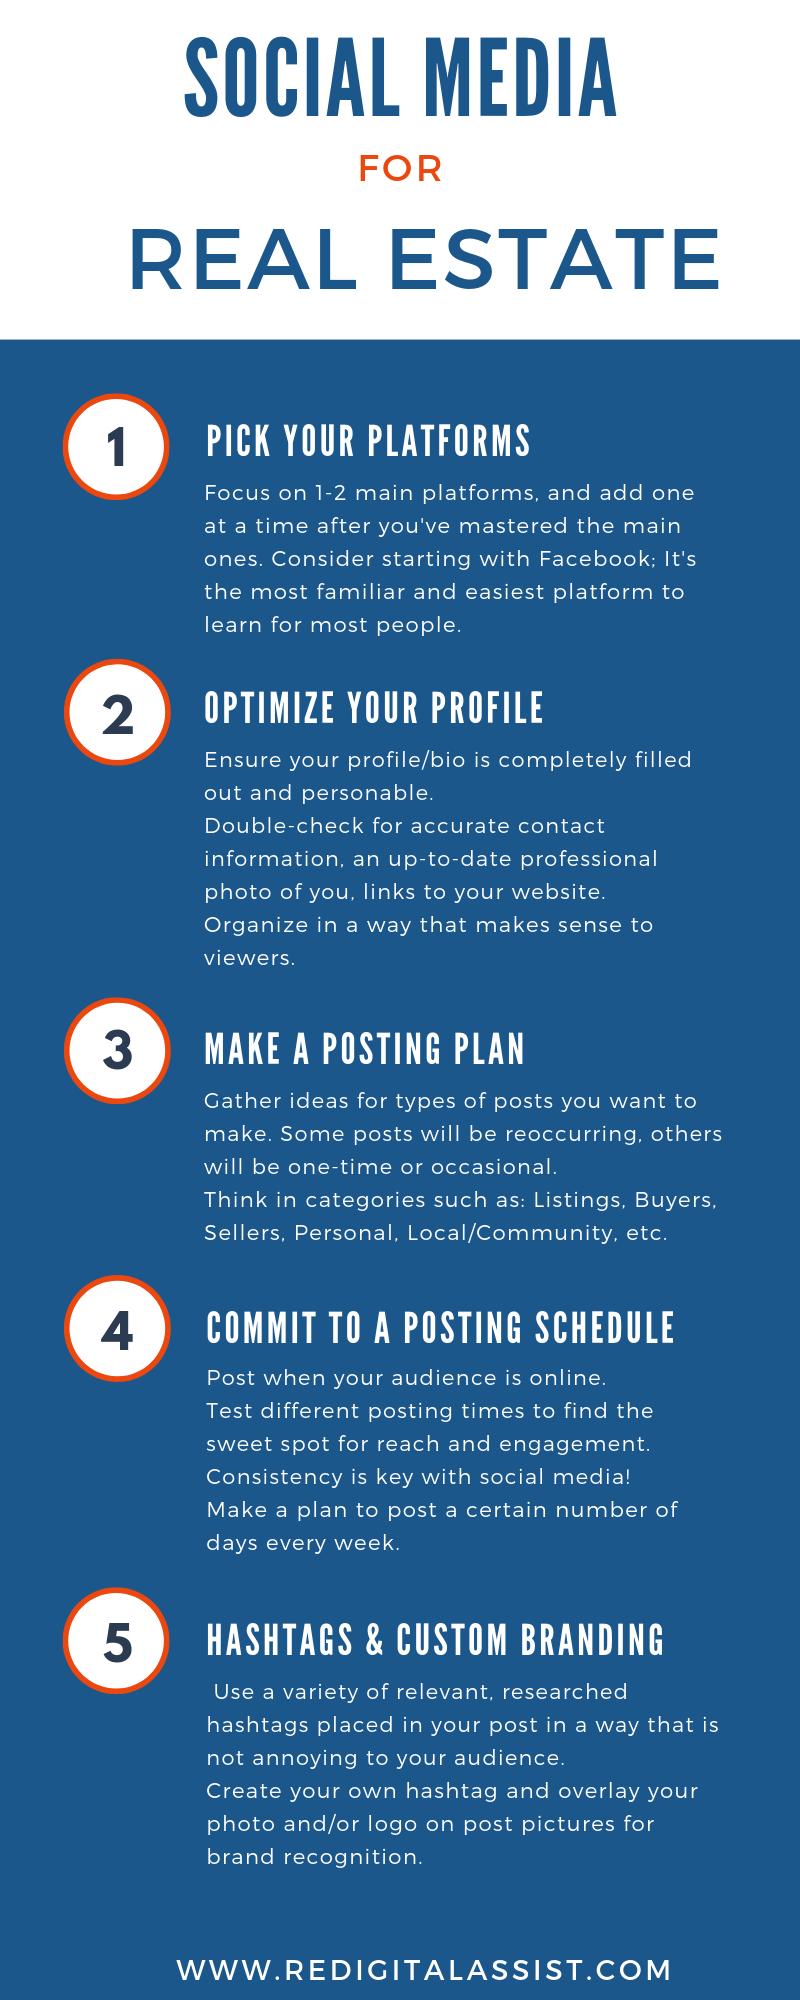 30 Enticing Real Estate Social Media Post Ideas - Sabrina's Admin Services